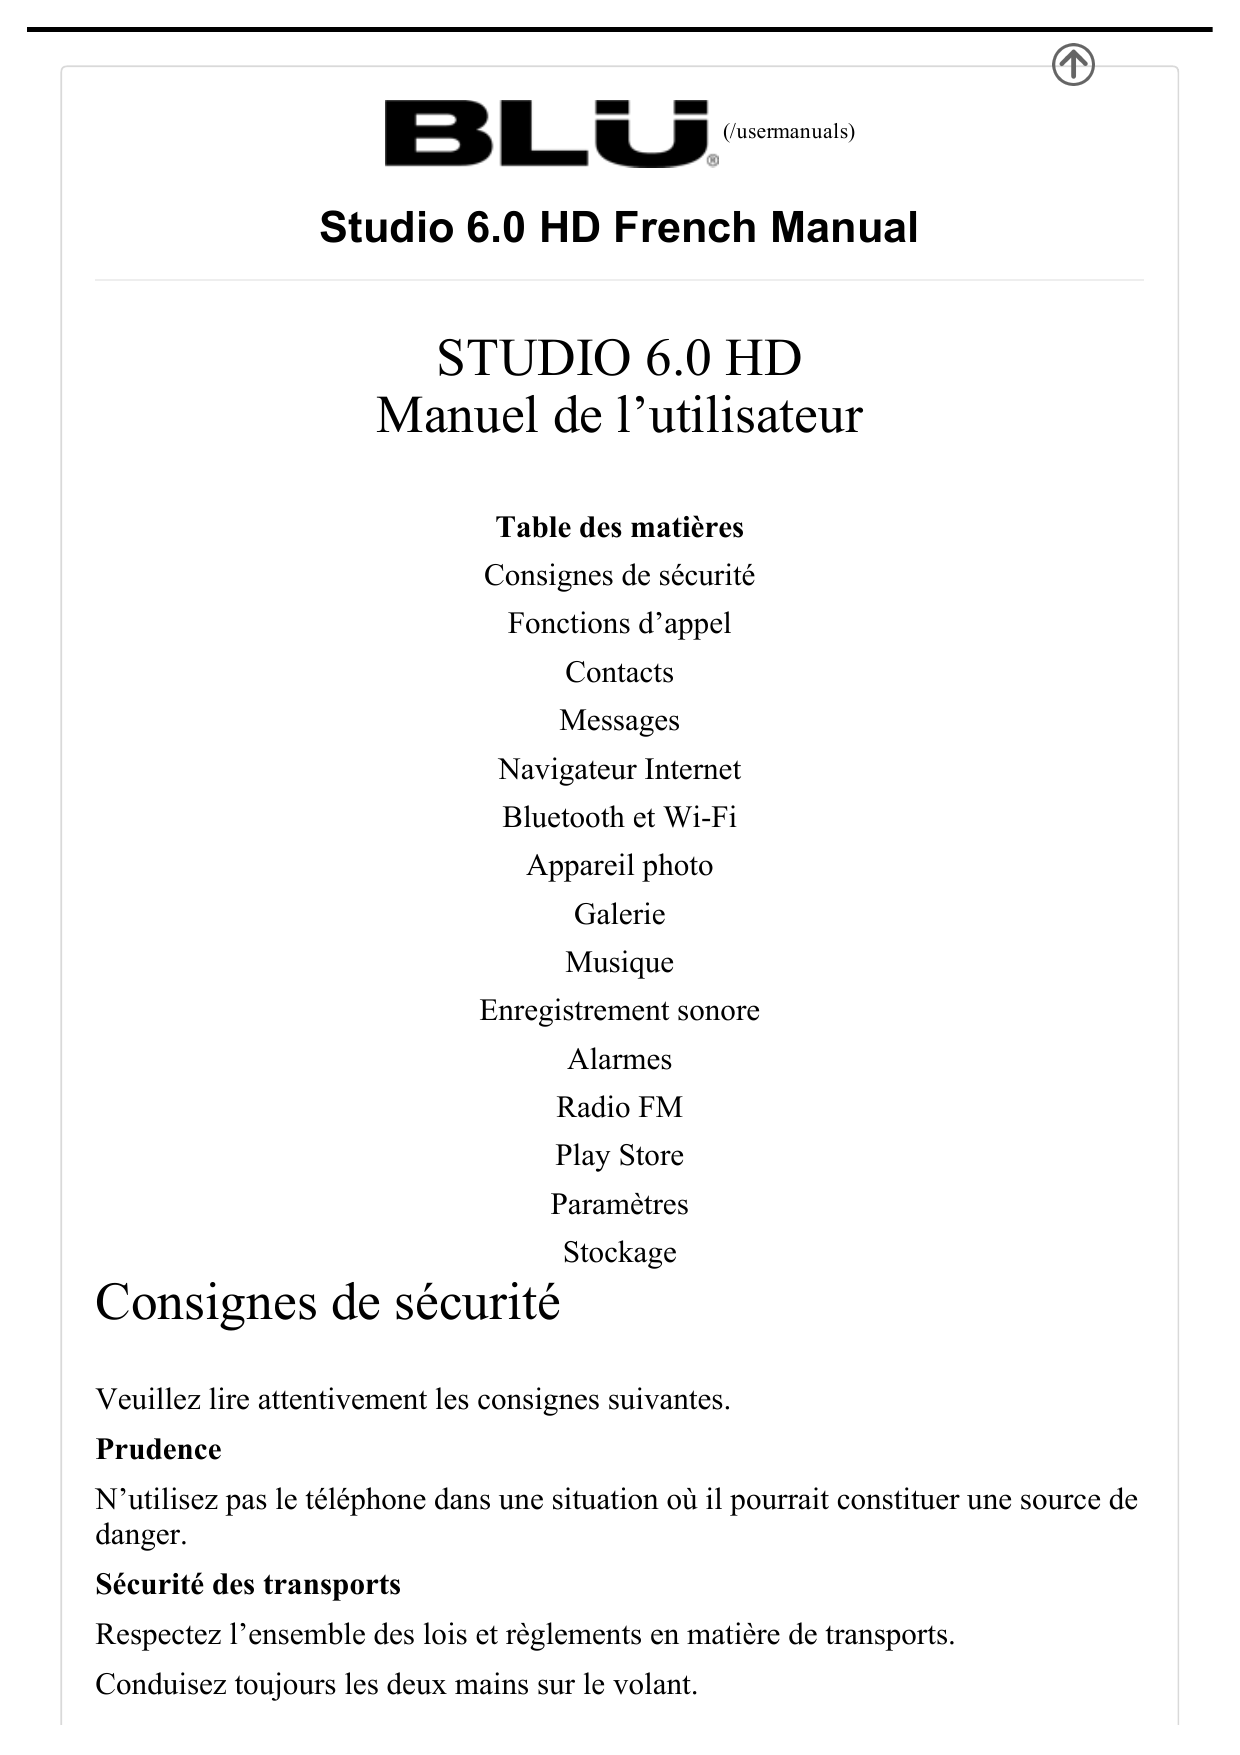  (/usermanuals)Studio 6.0 HD French Manual STUDIO 6.0 HDManuel de l’utilisateur Table des matièresConsignes de sécuritéFonctions